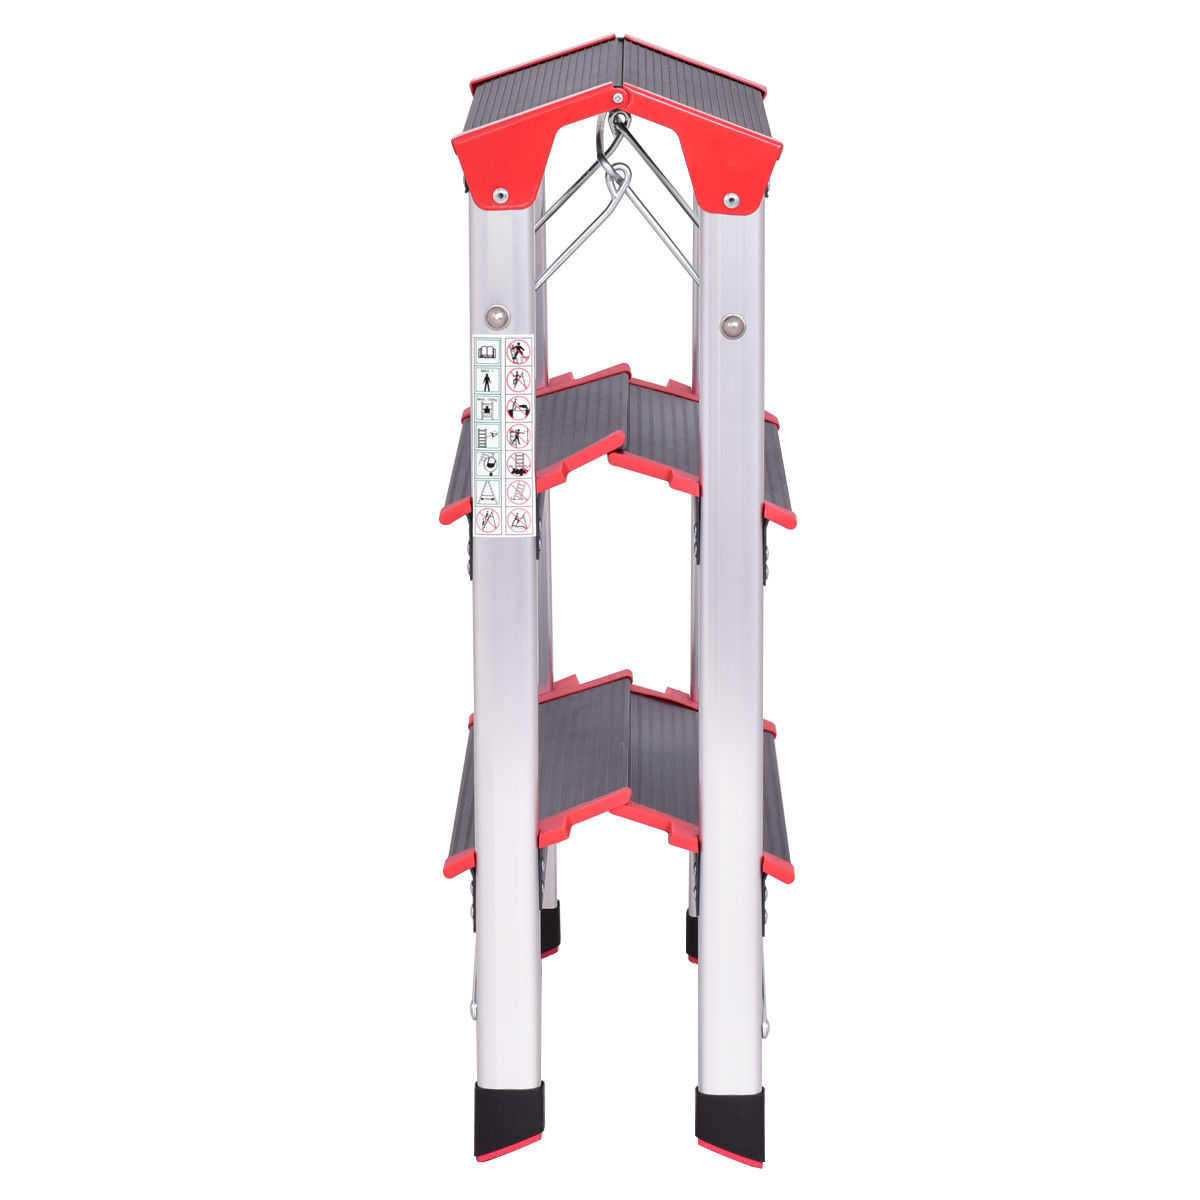 Costway 3 Step Aluminum Lightweight Ladder Folding Non-Slip Platform Stool 330Lbs Load